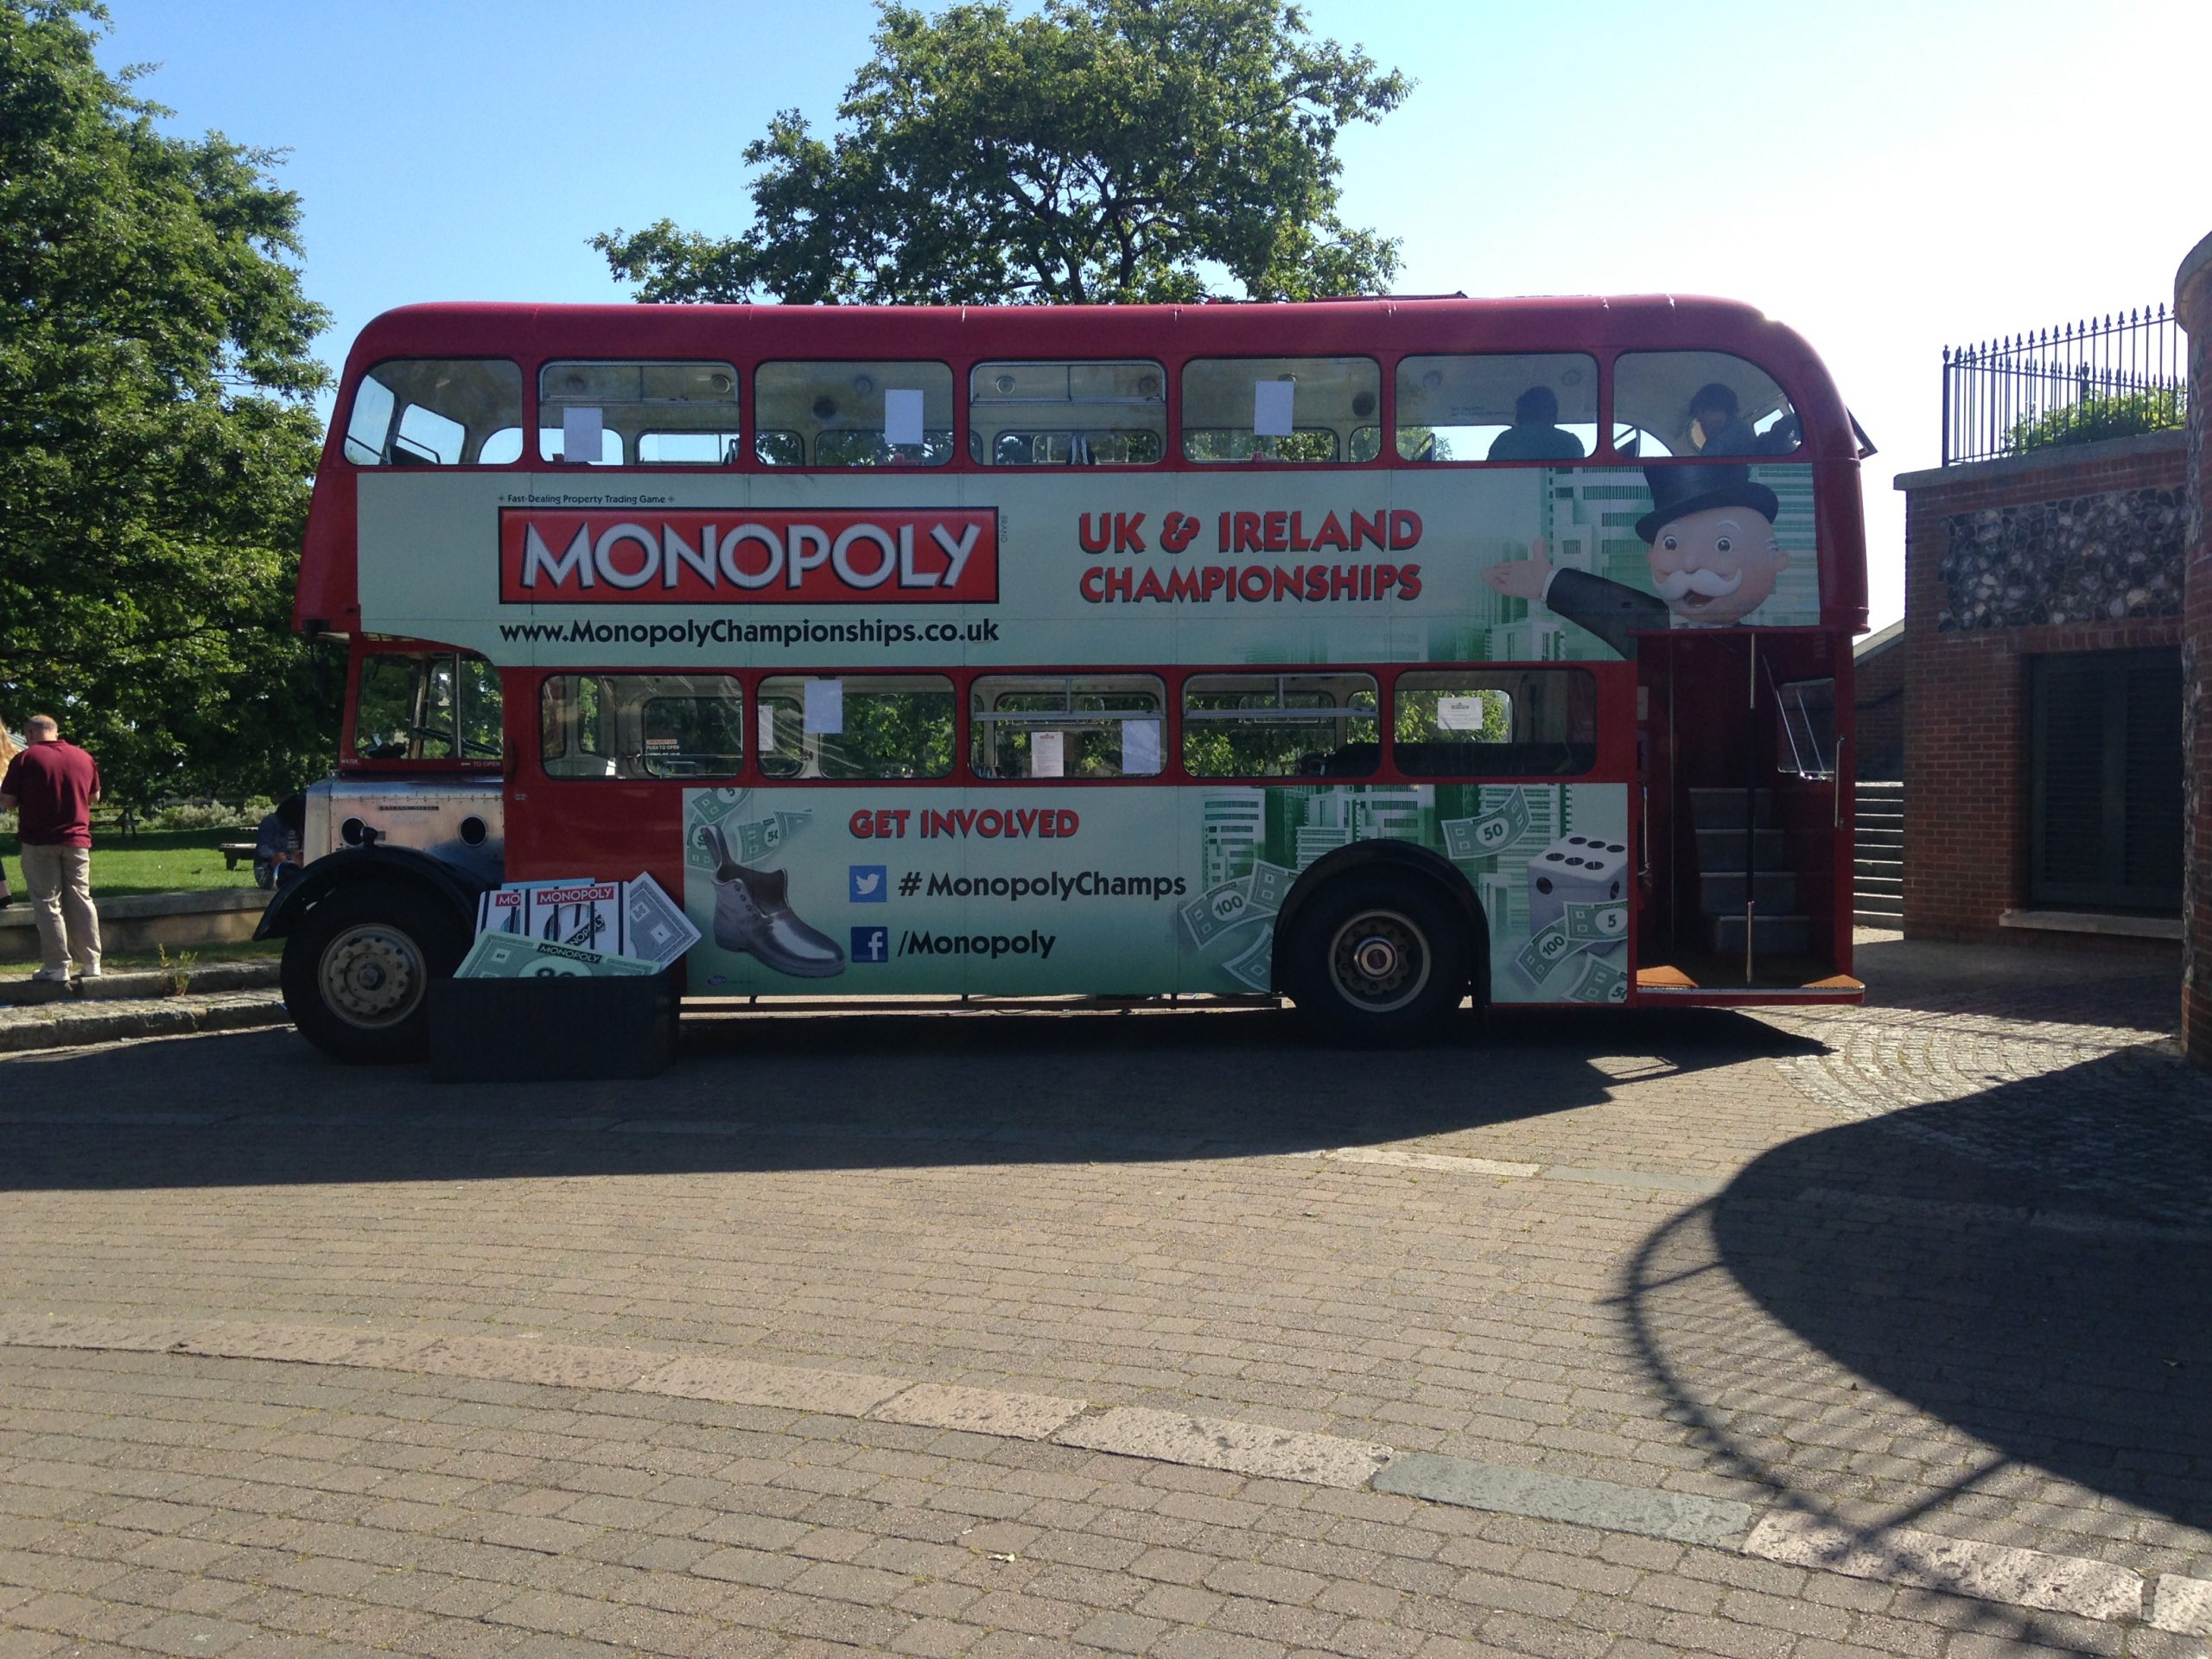 Monopoly UK & Ireland bus